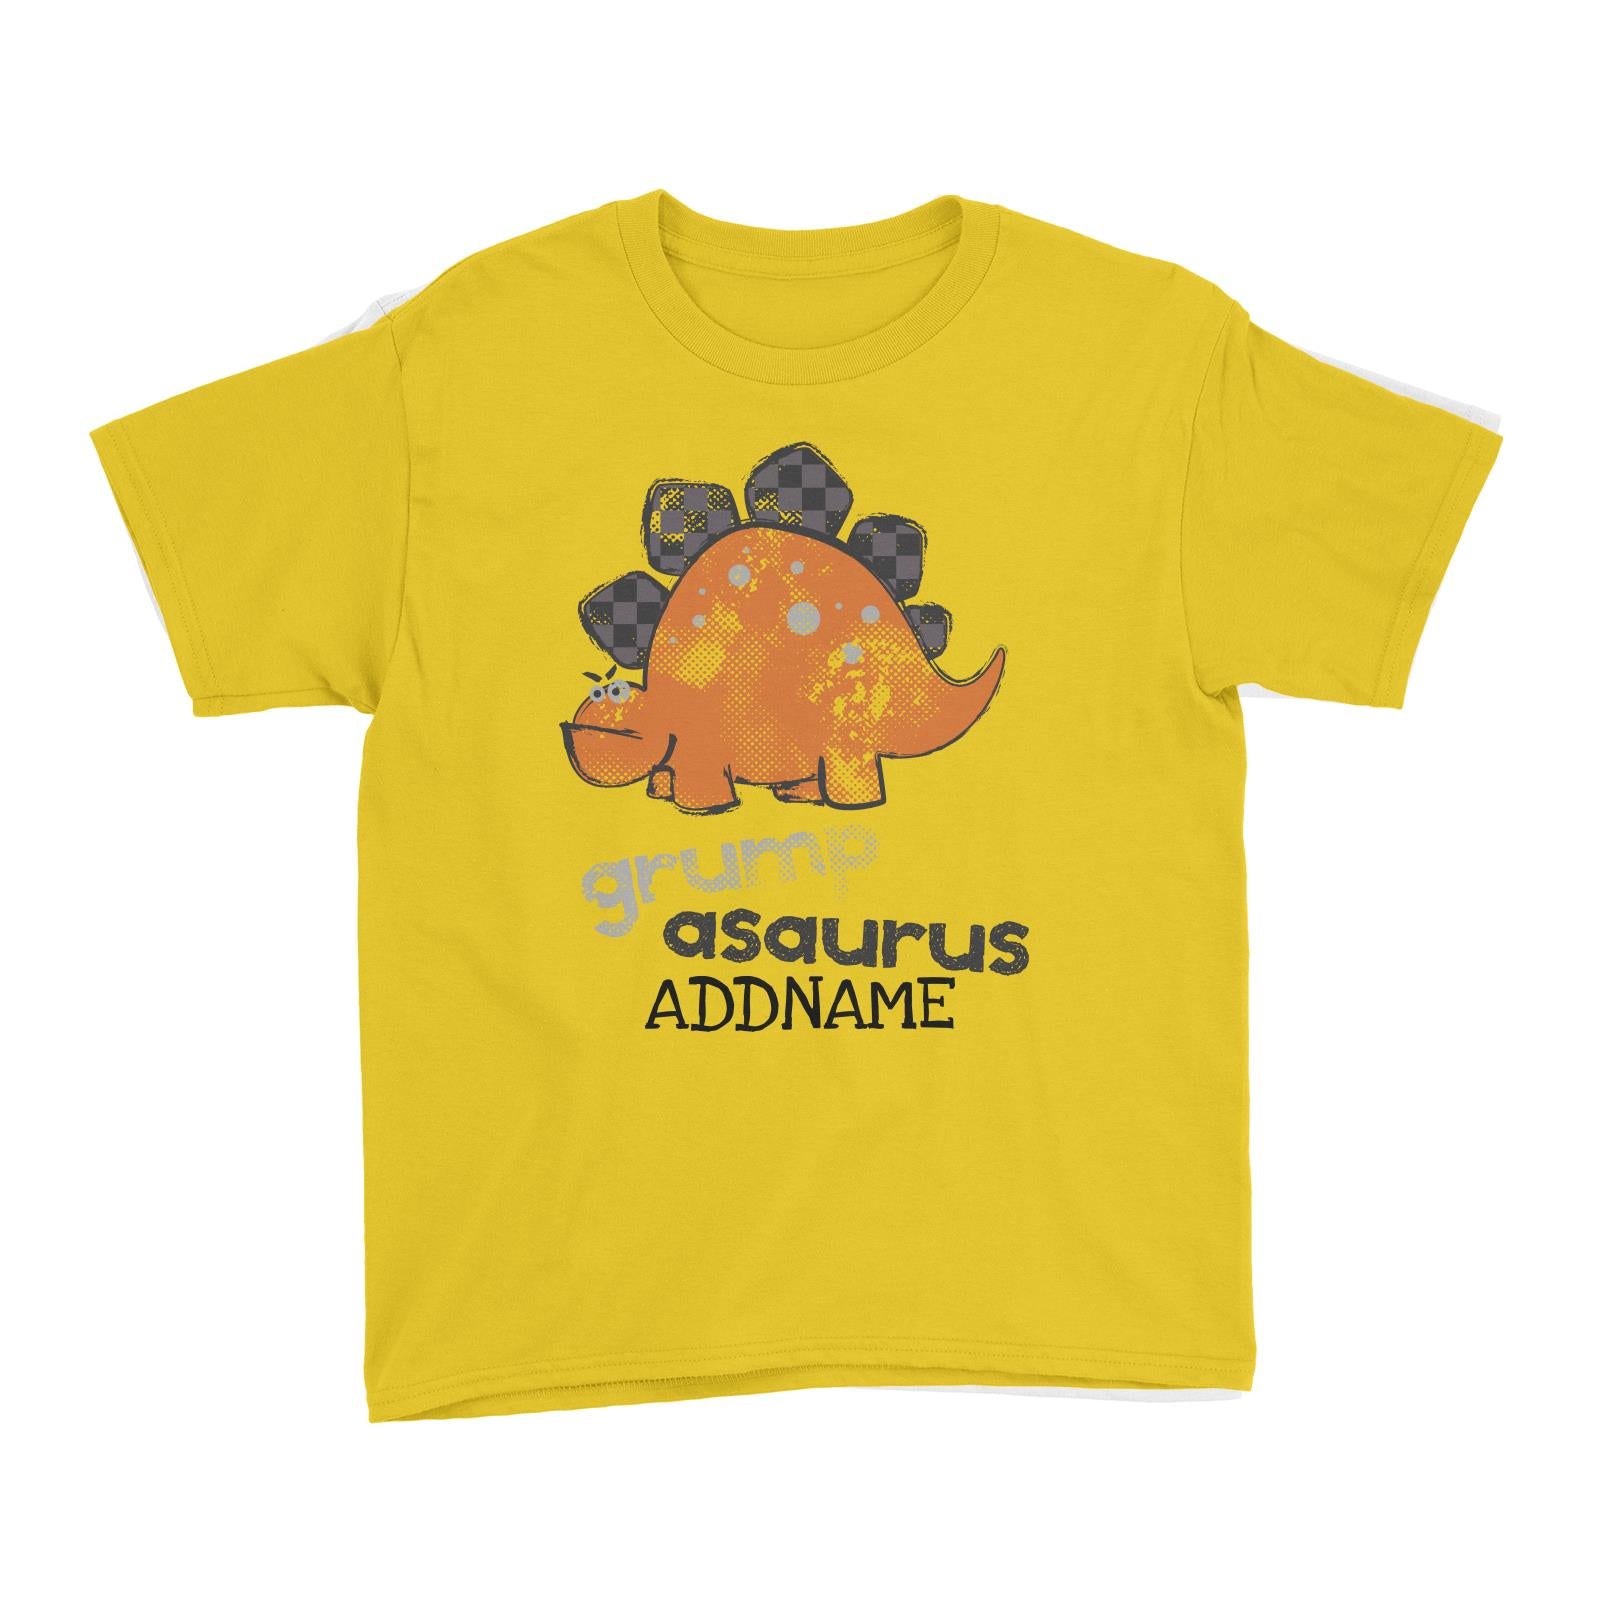 Grumpasaurus Dinosaur Addname Kid's T-Shirt